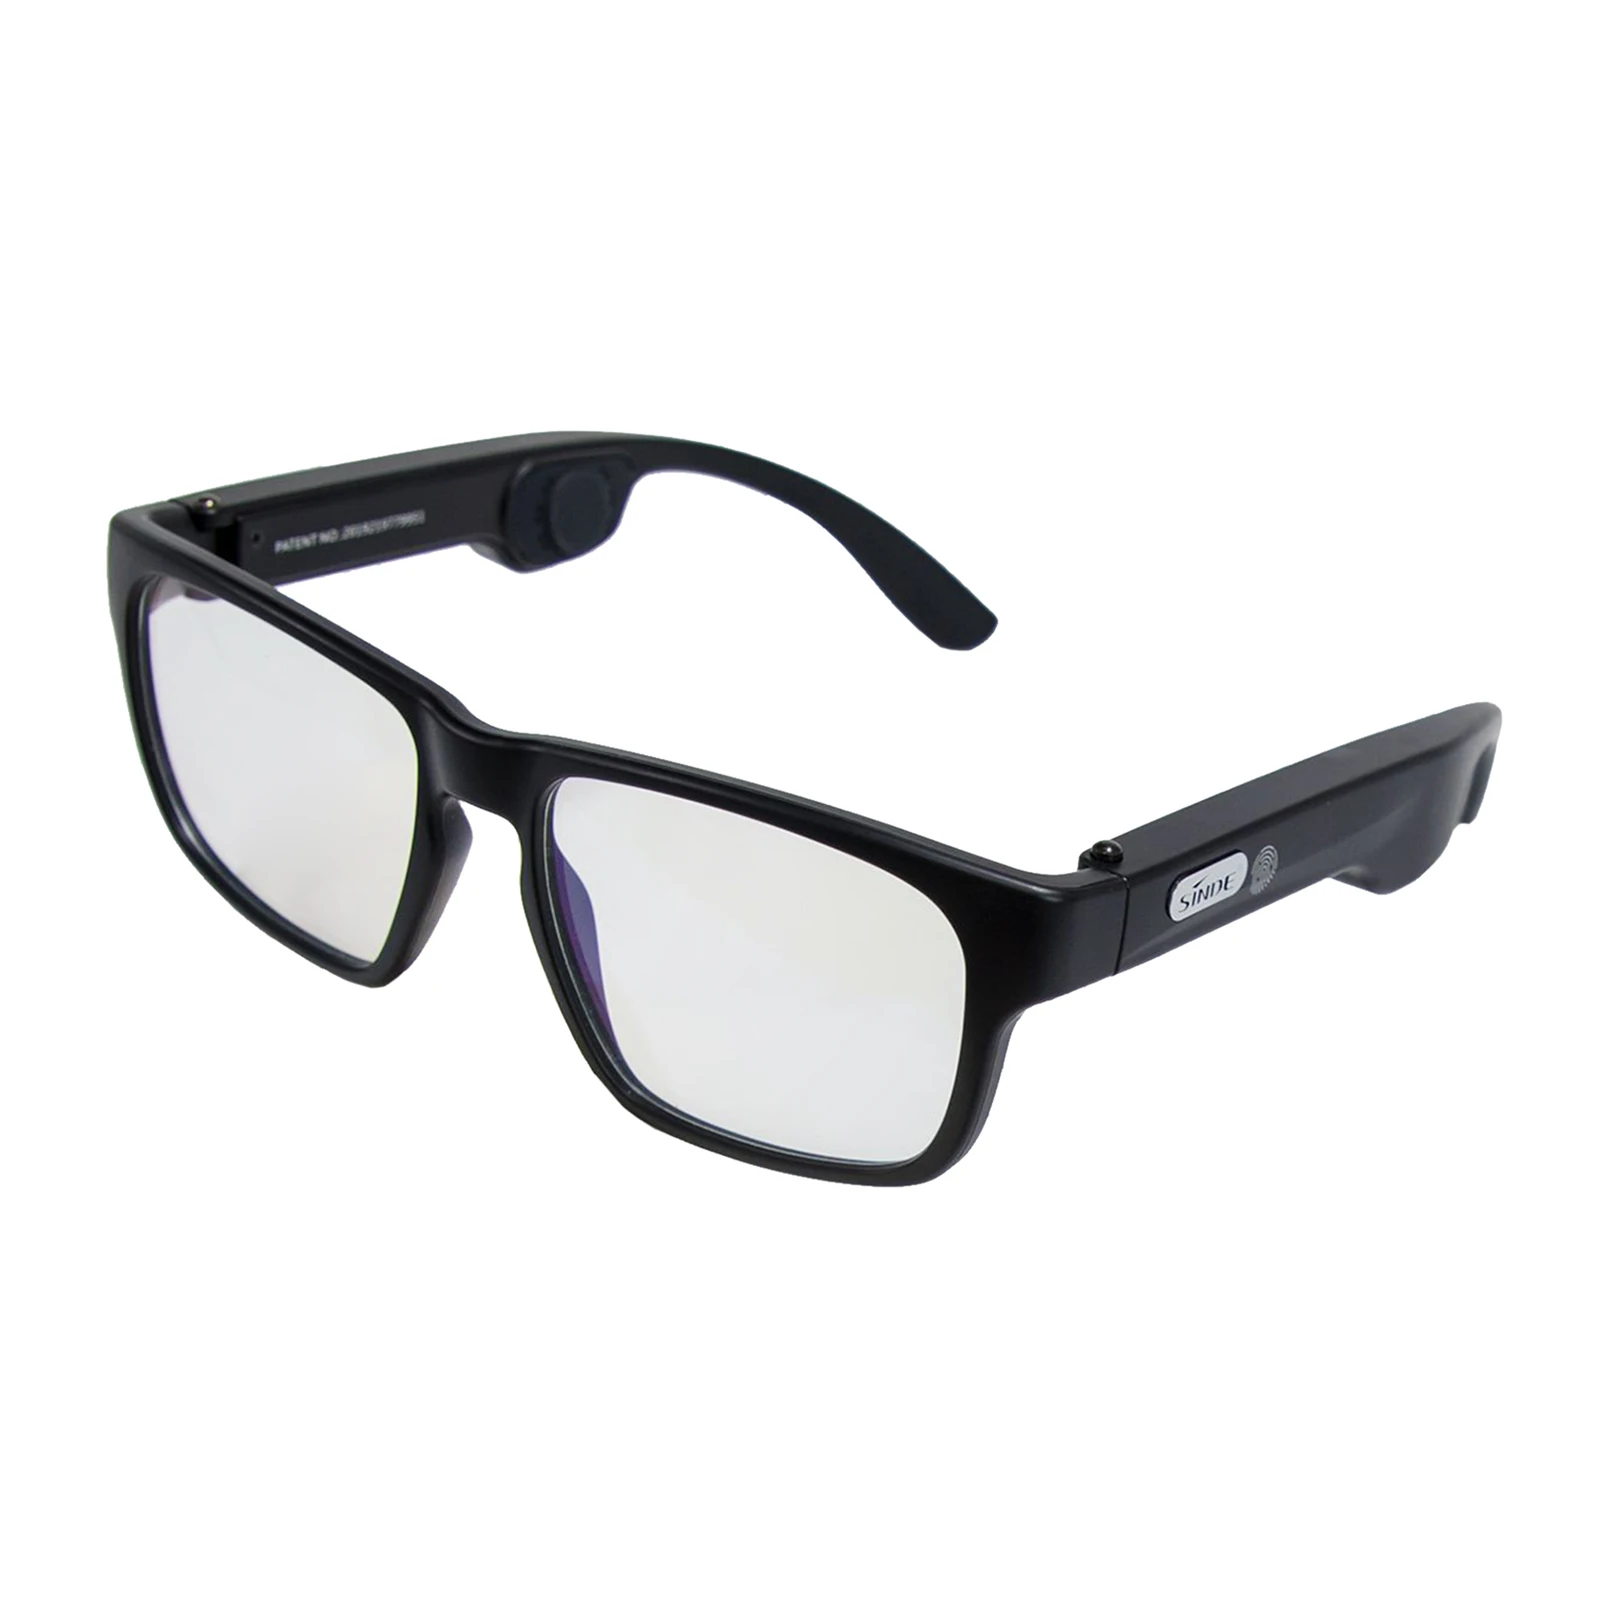 Bone Conduction Glasses Sunglasses Audio Frames Stereo Bluetooth Wireless Earphones